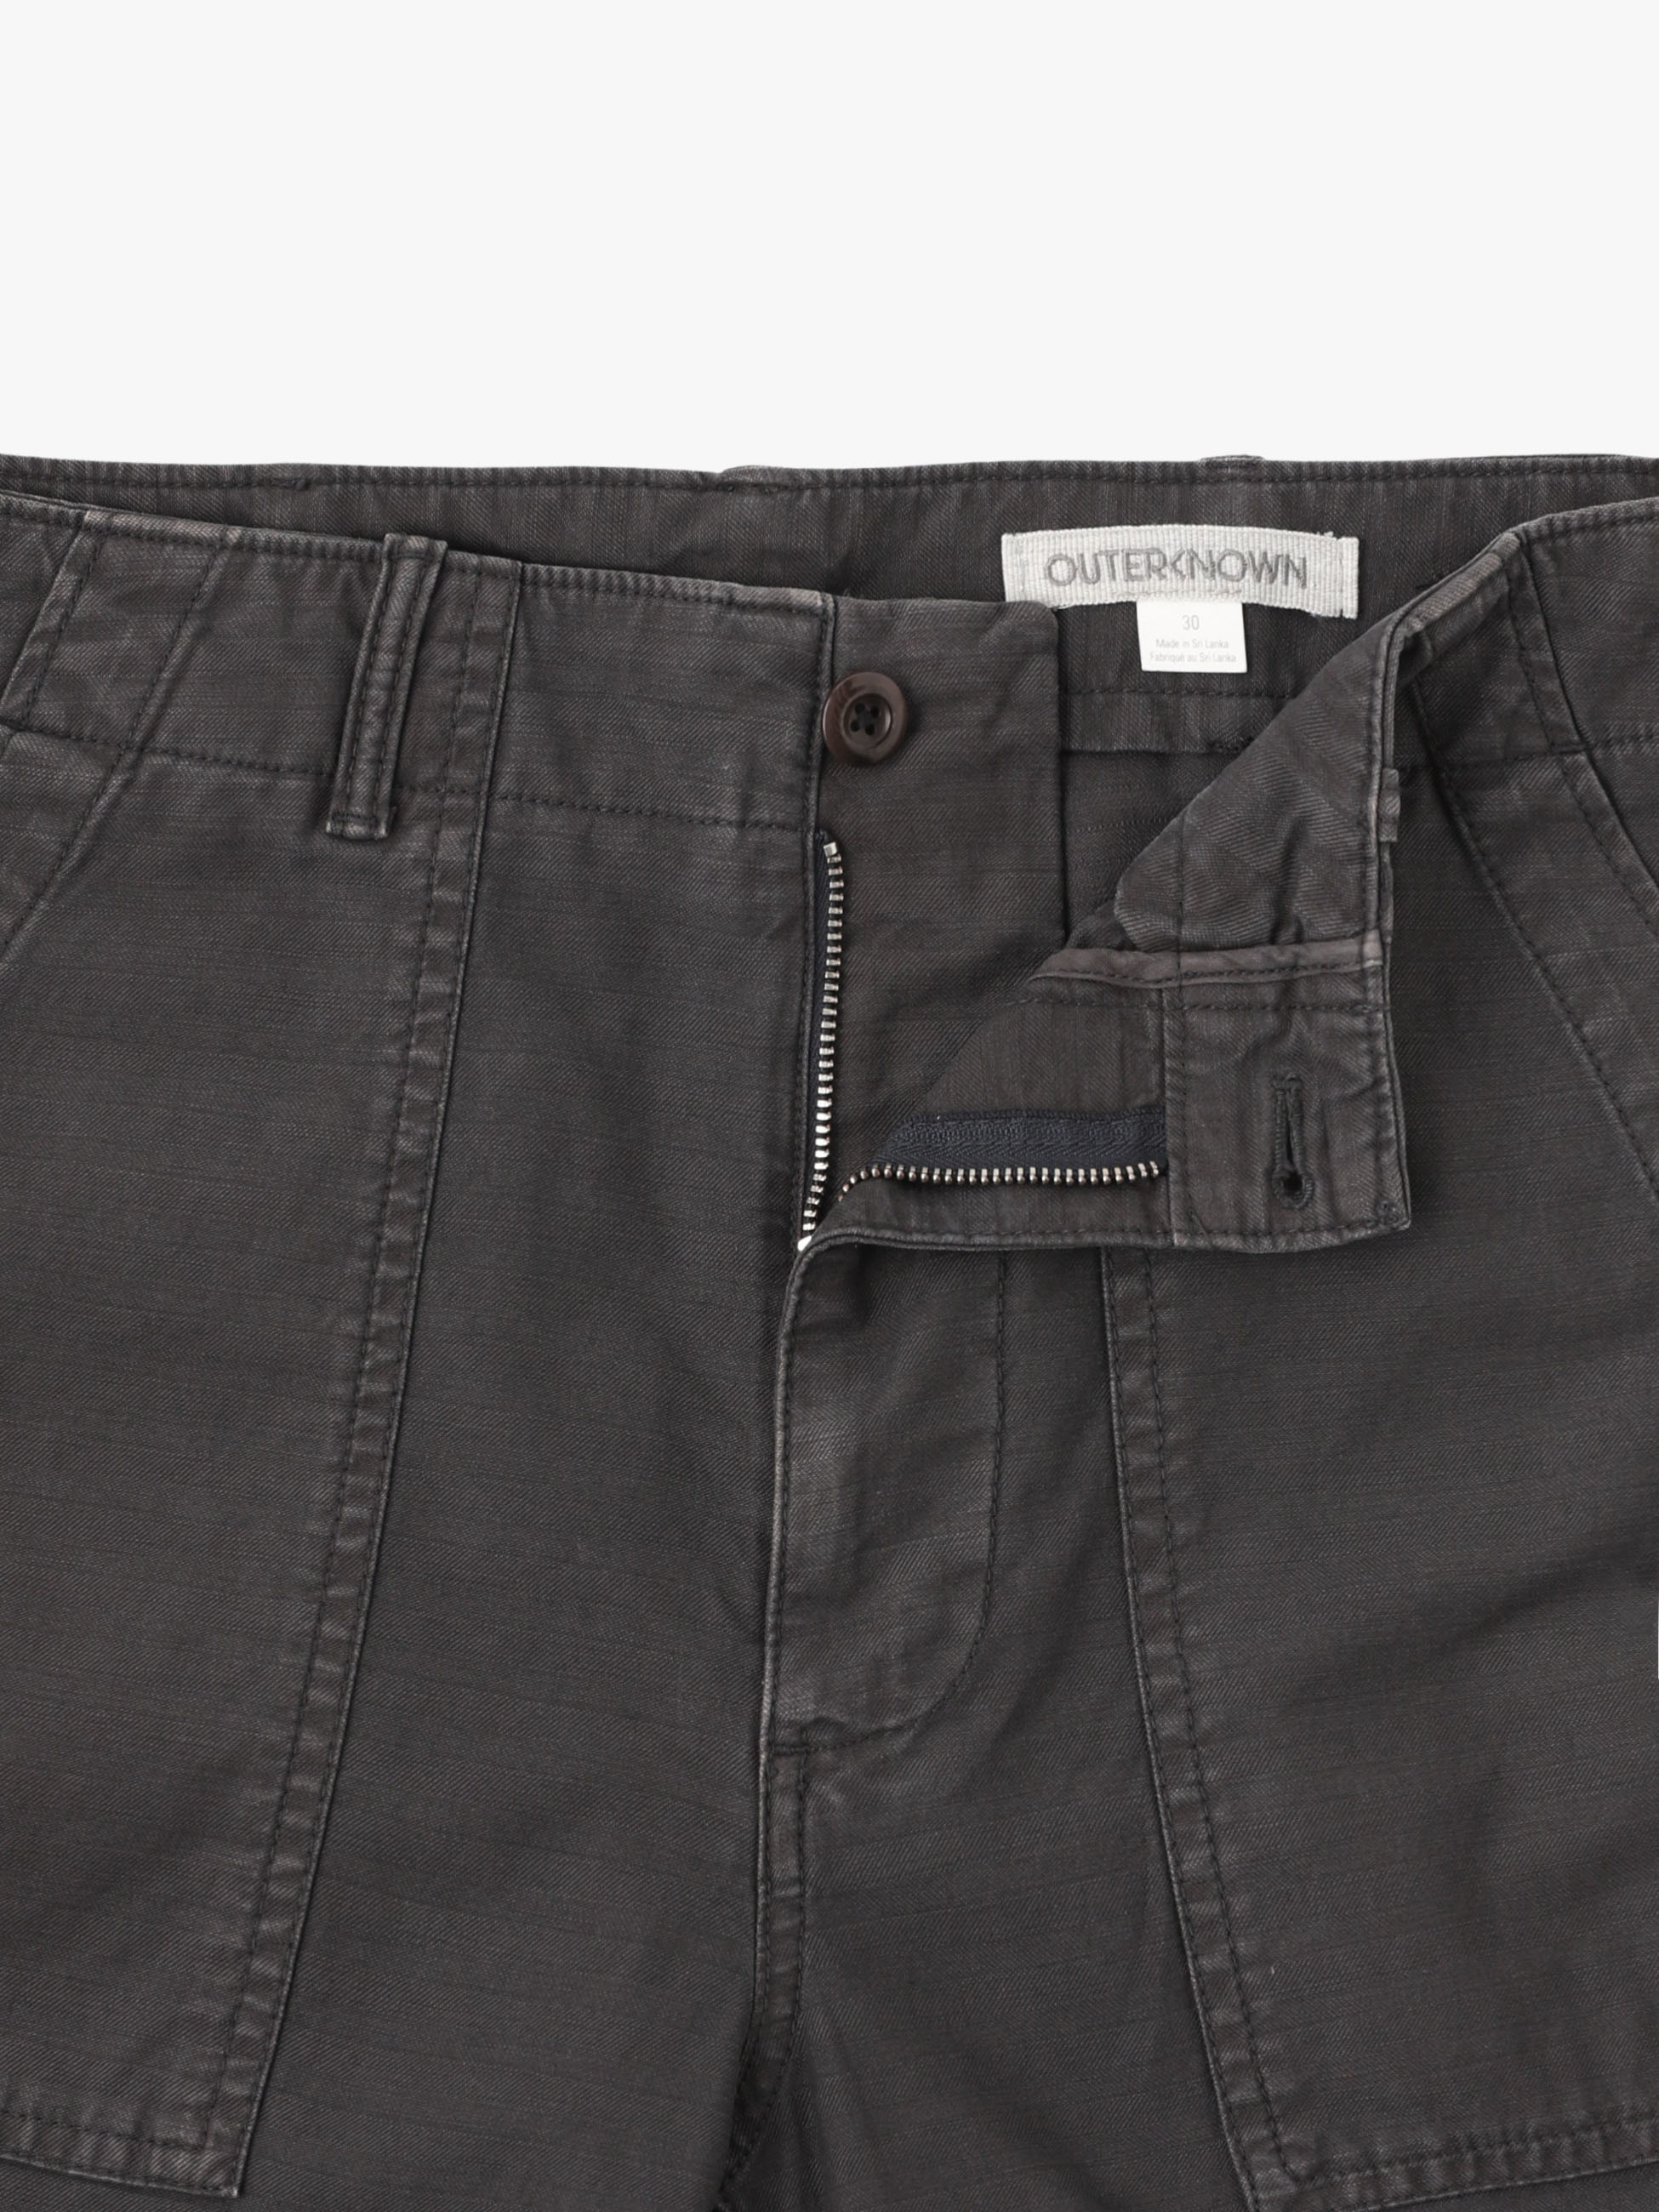 The Utilitarian Pants 詳細画像 charcoal gray 2